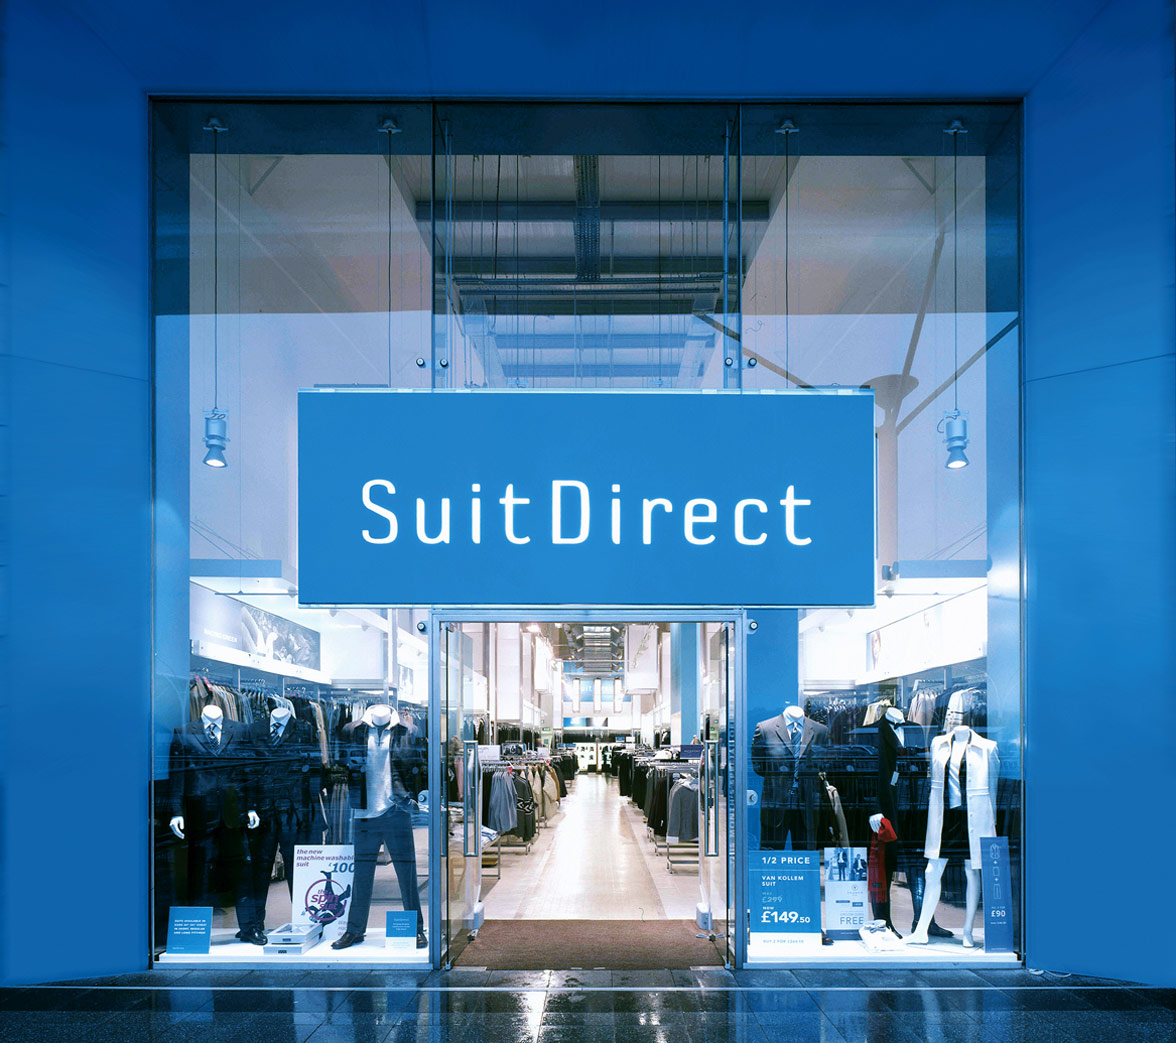 Suit Direct retail brand store fascia